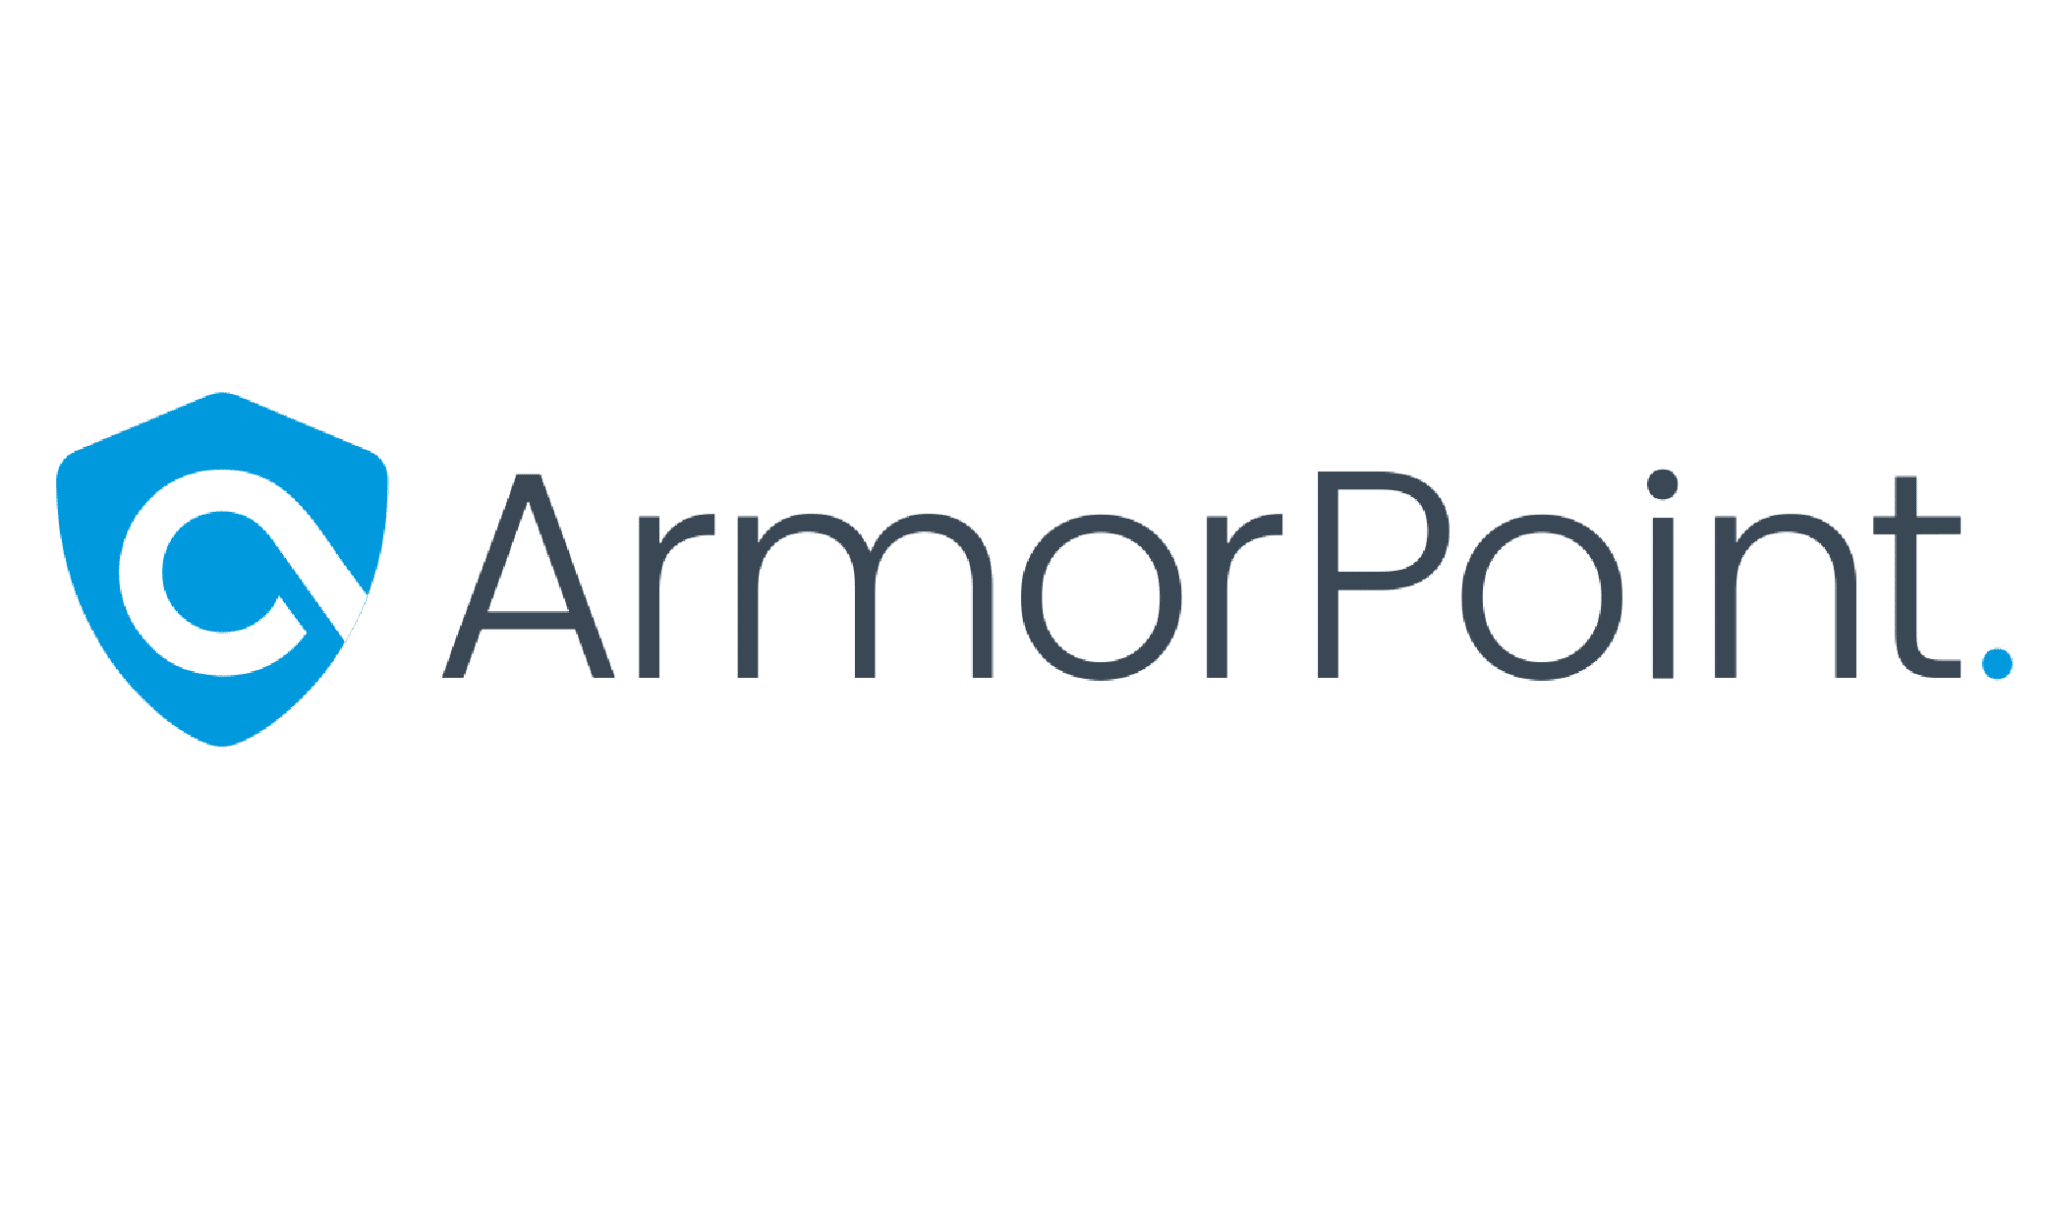 armorpoint logo